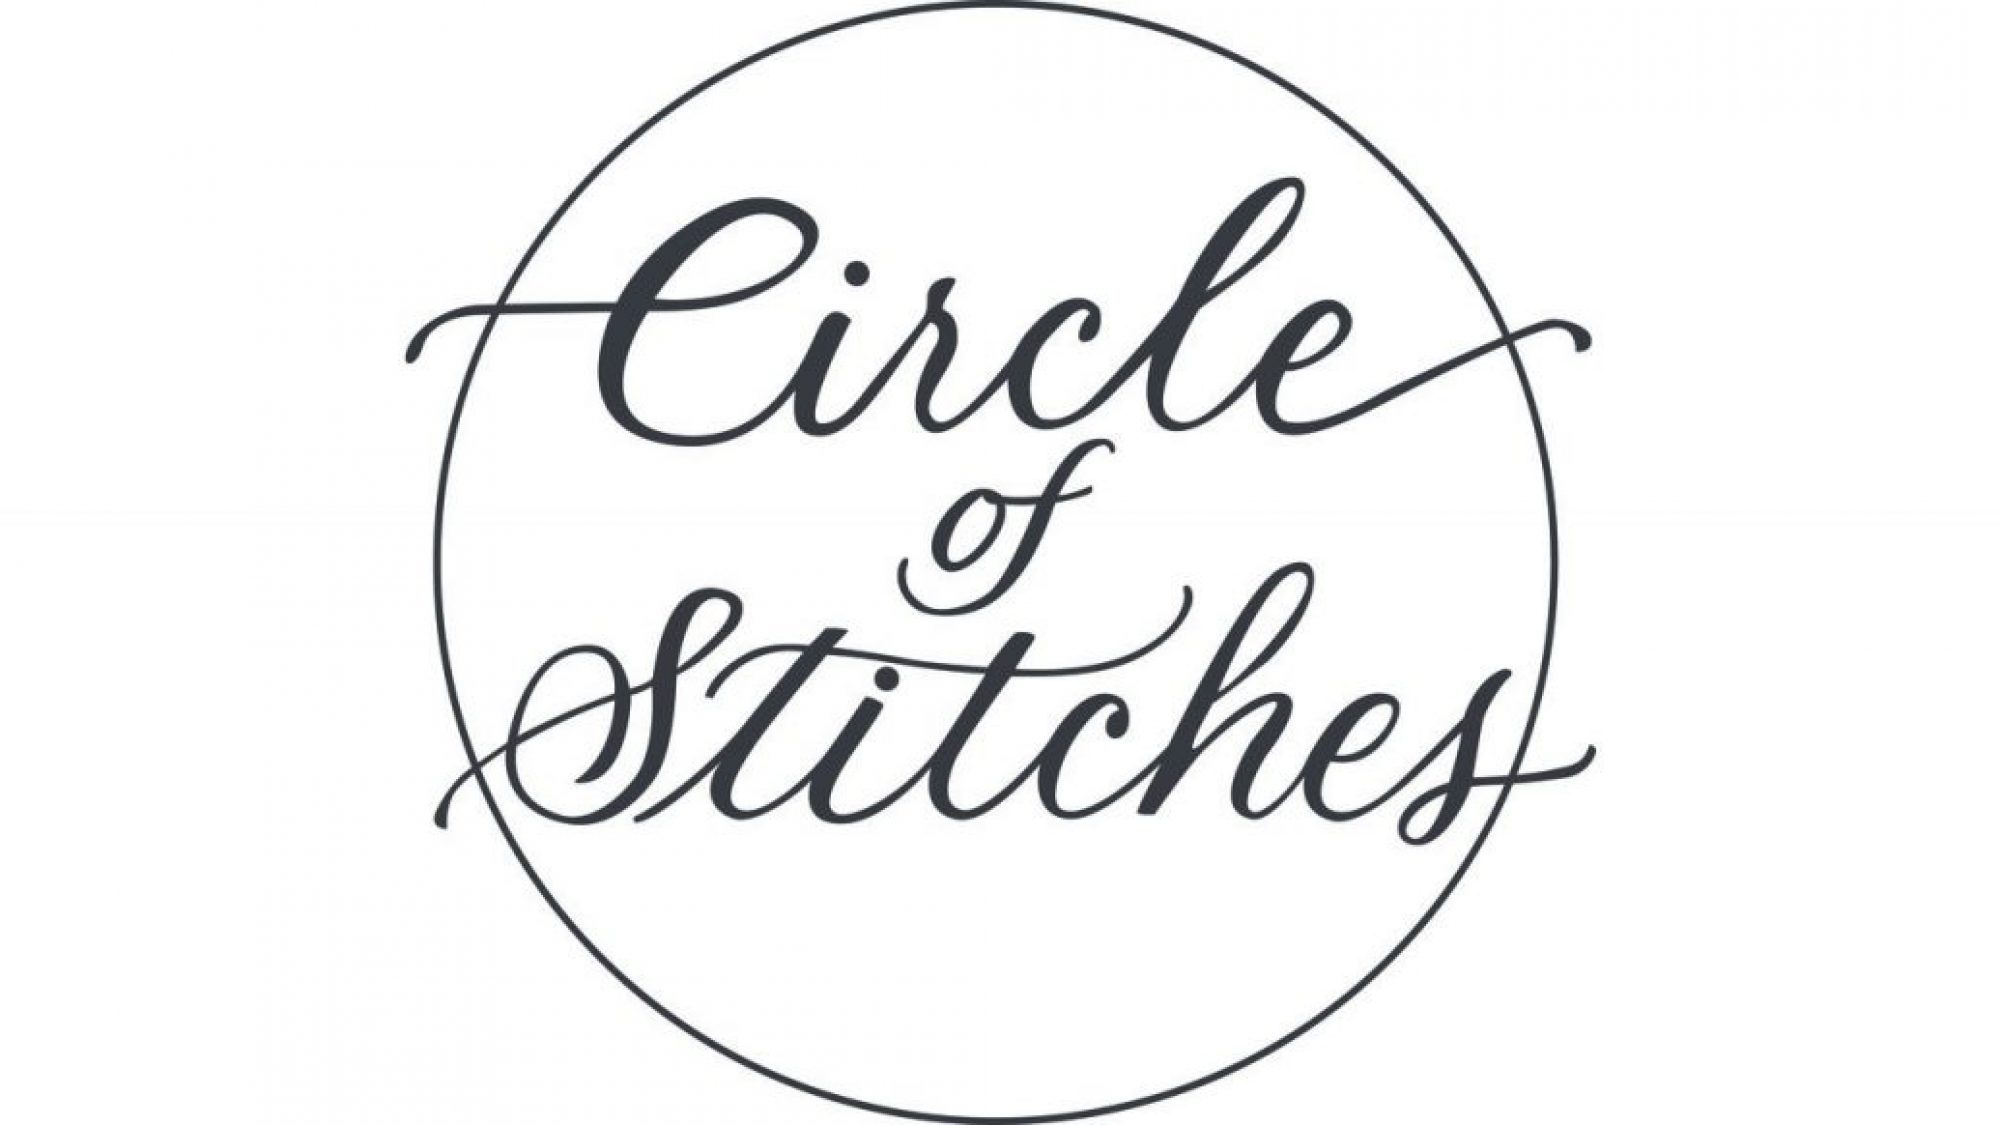 Circle of Stitches